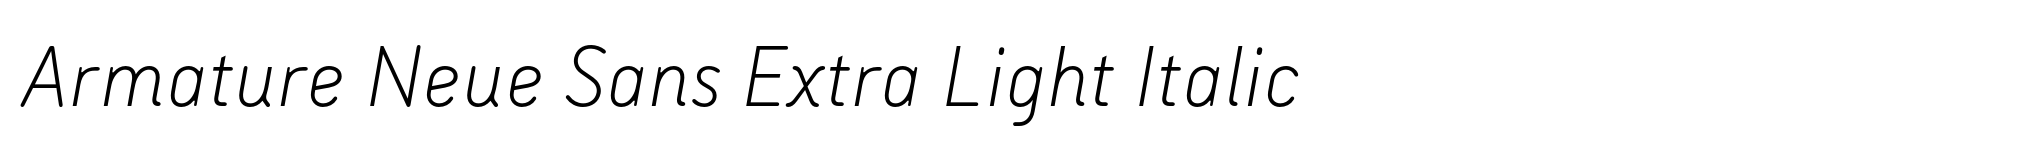 Armature Neue Sans Extra Light Italic image